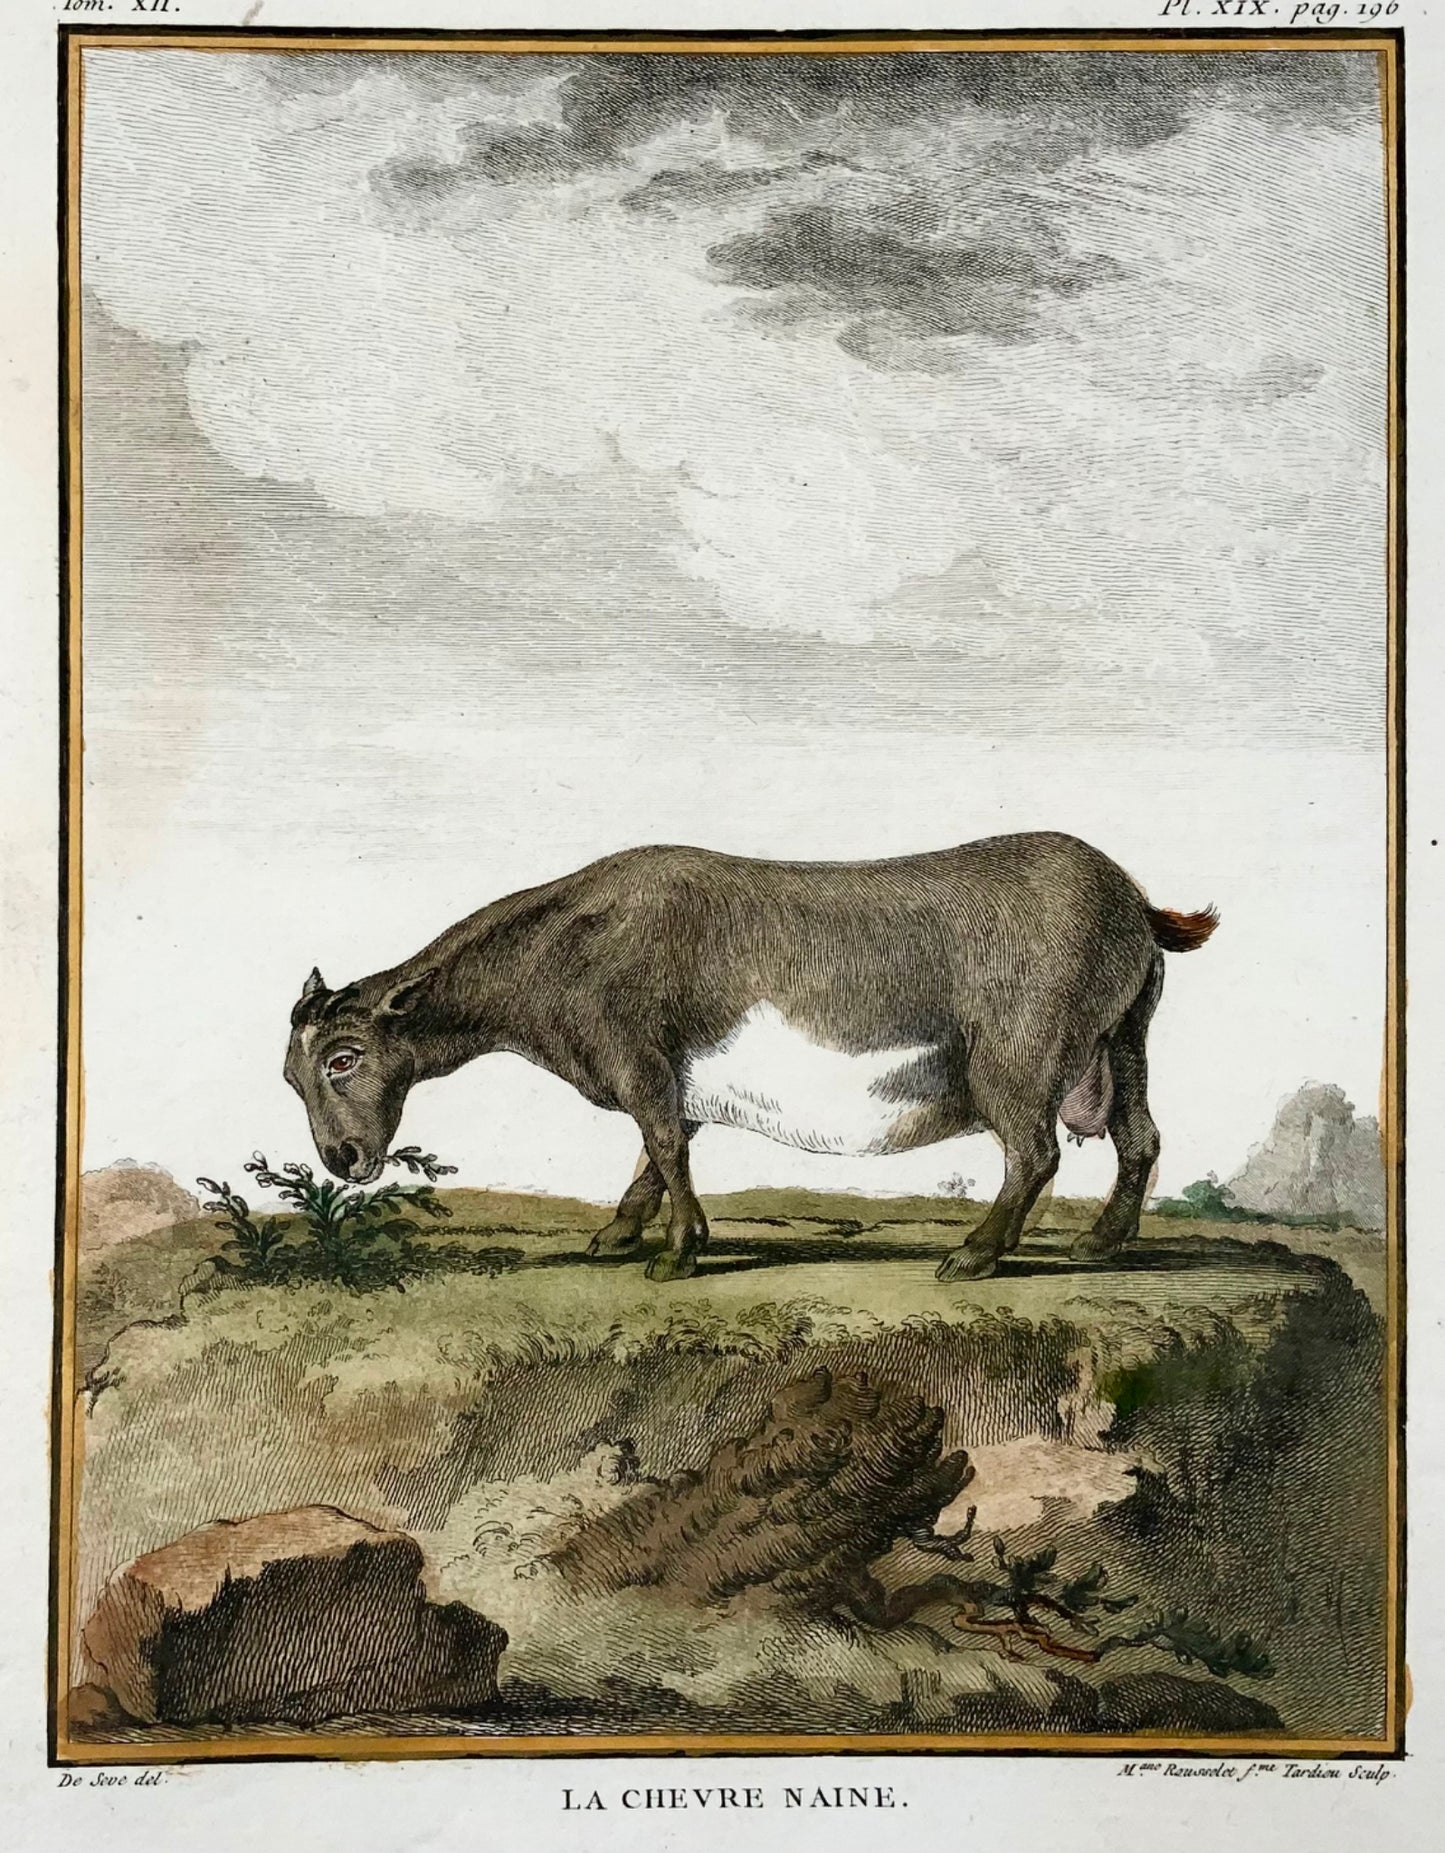 1779 Chèvre pygmée ; J. de Sève, Mammifère, gravure in-4